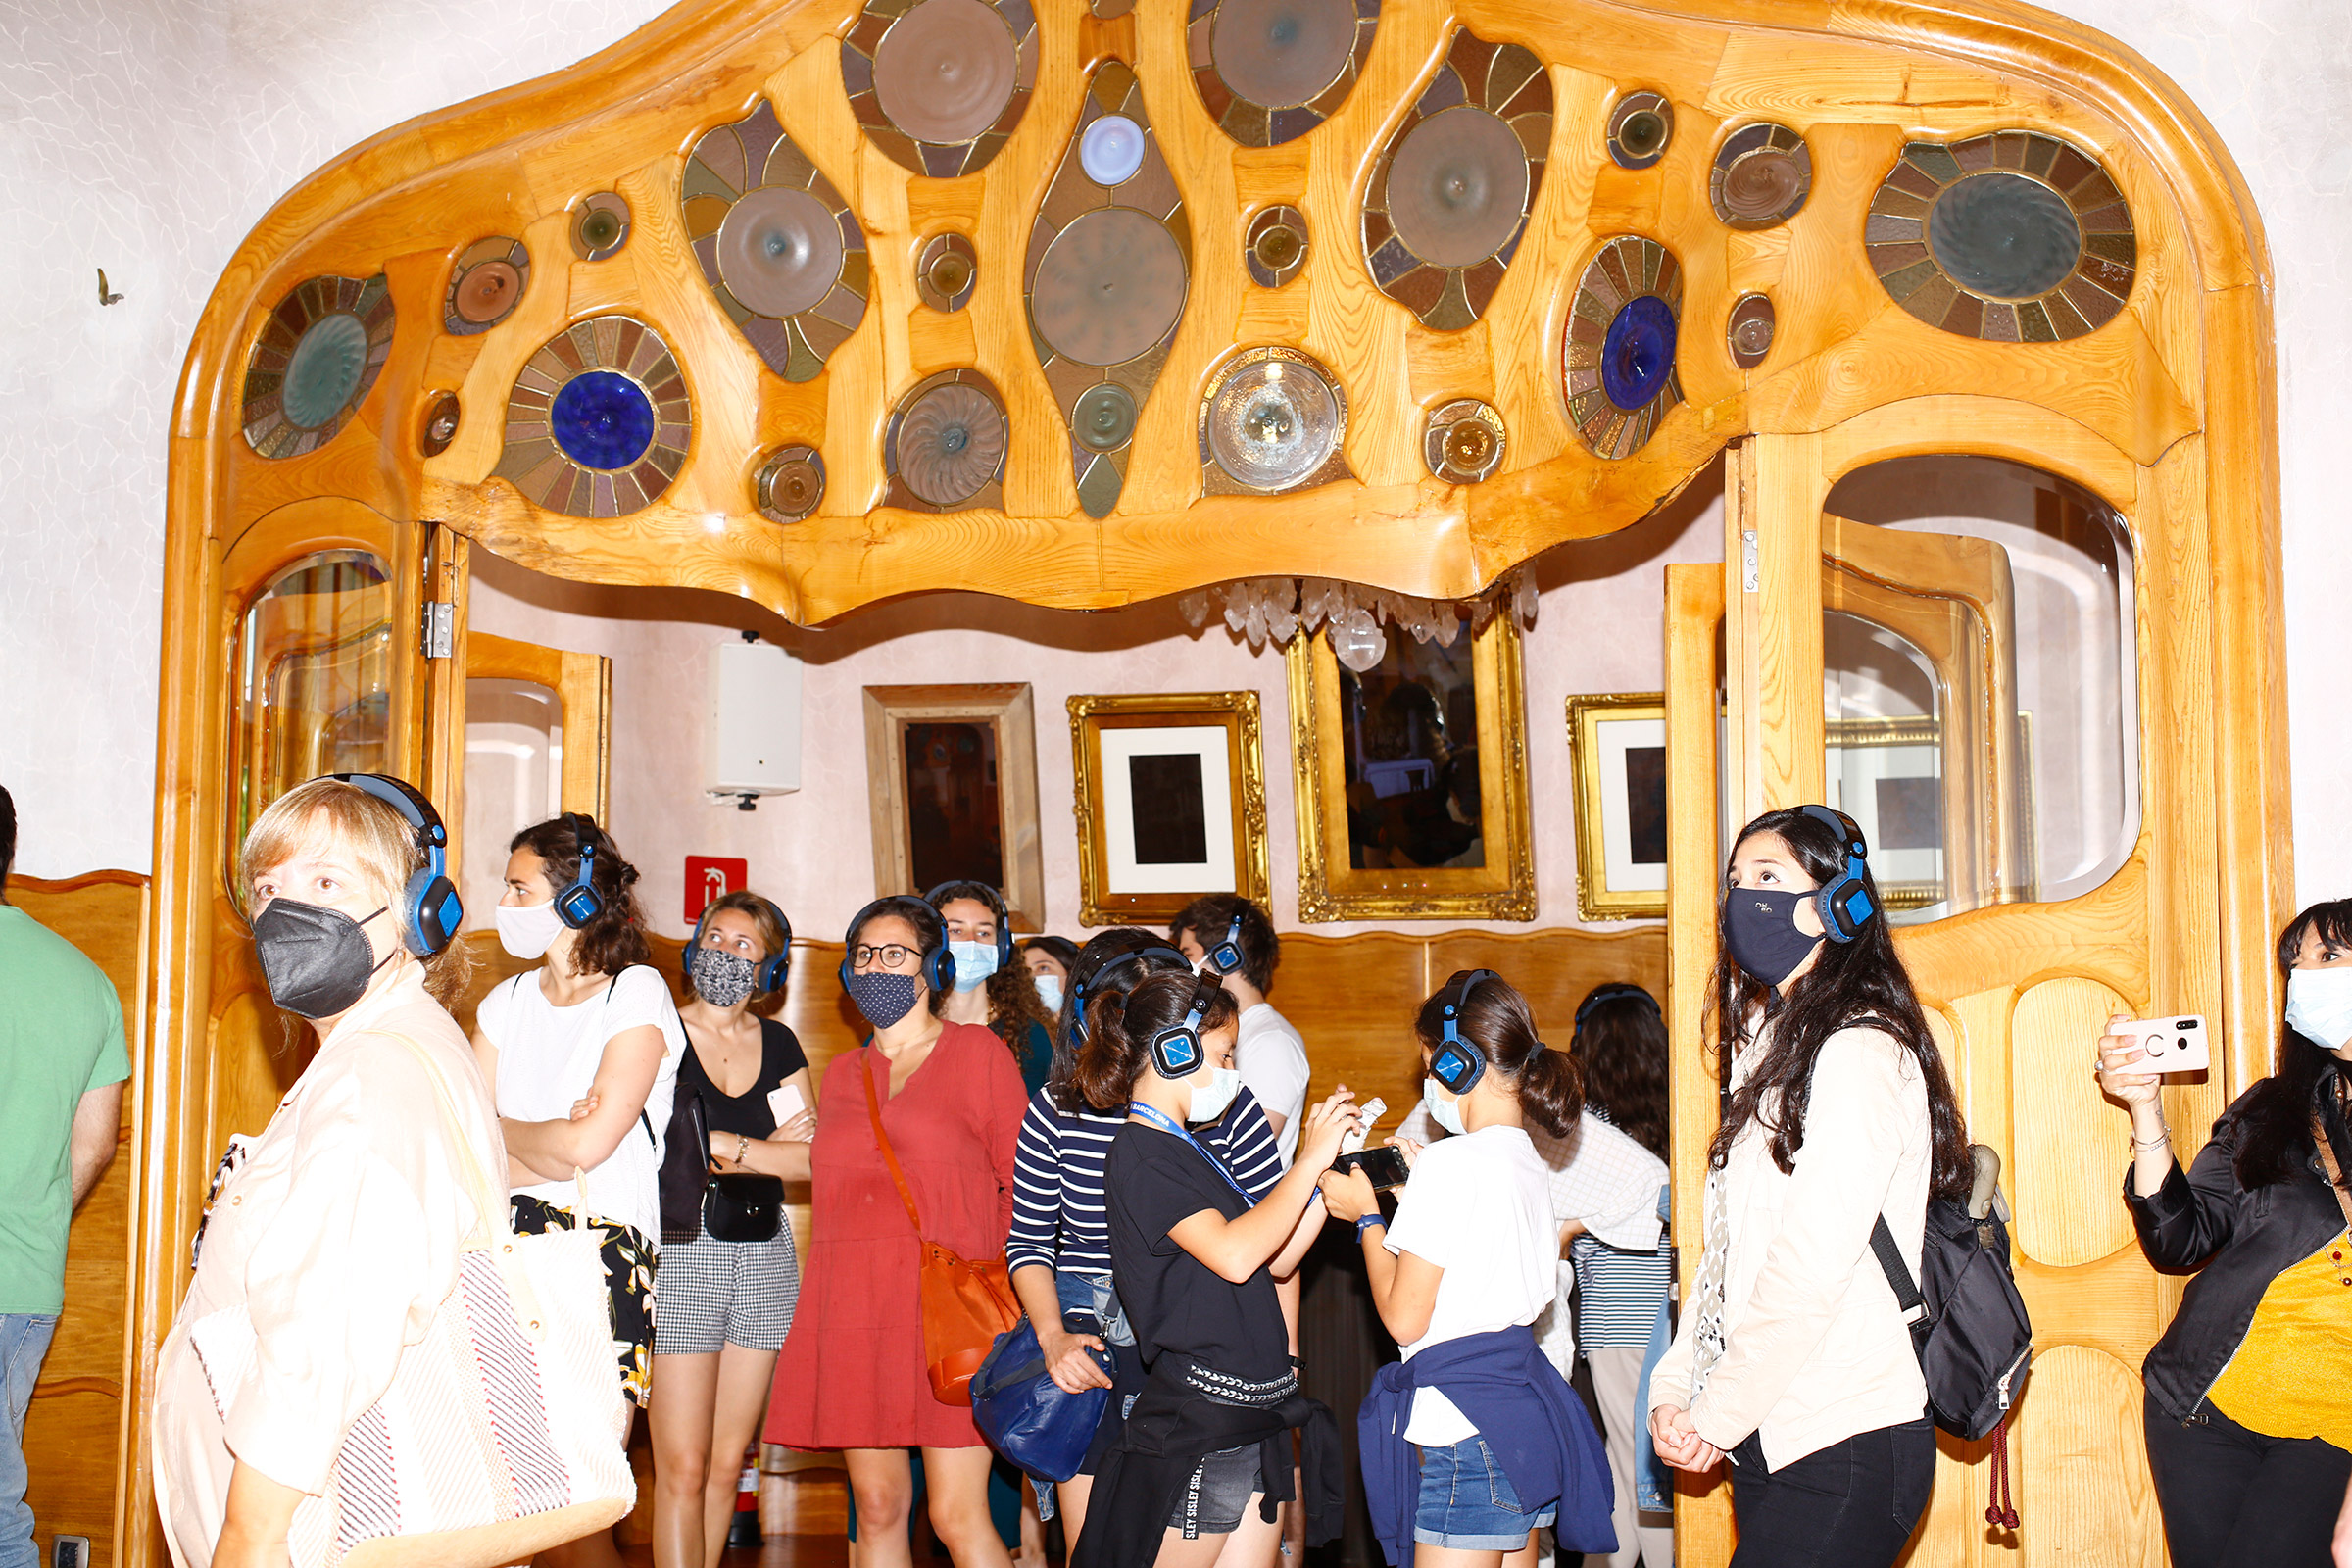 Masked tourists visit Casa Batlló on June 6. (Ricardo Cases for TIME)